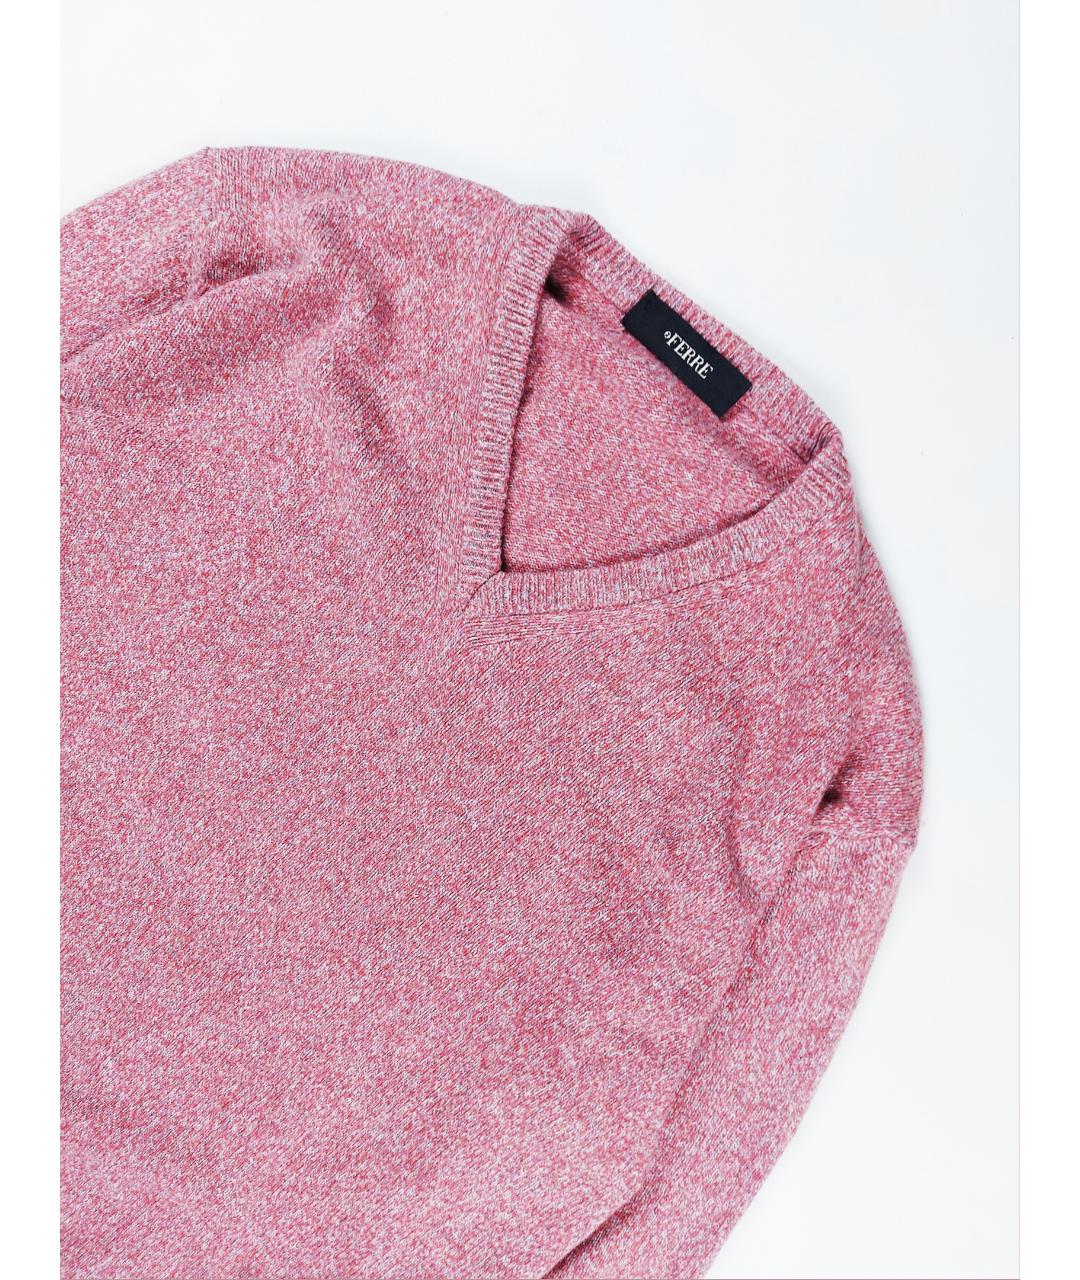 GIANFRANCO FERRE VINTAGE Розовый шерстяной джемпер / свитер, фото 3